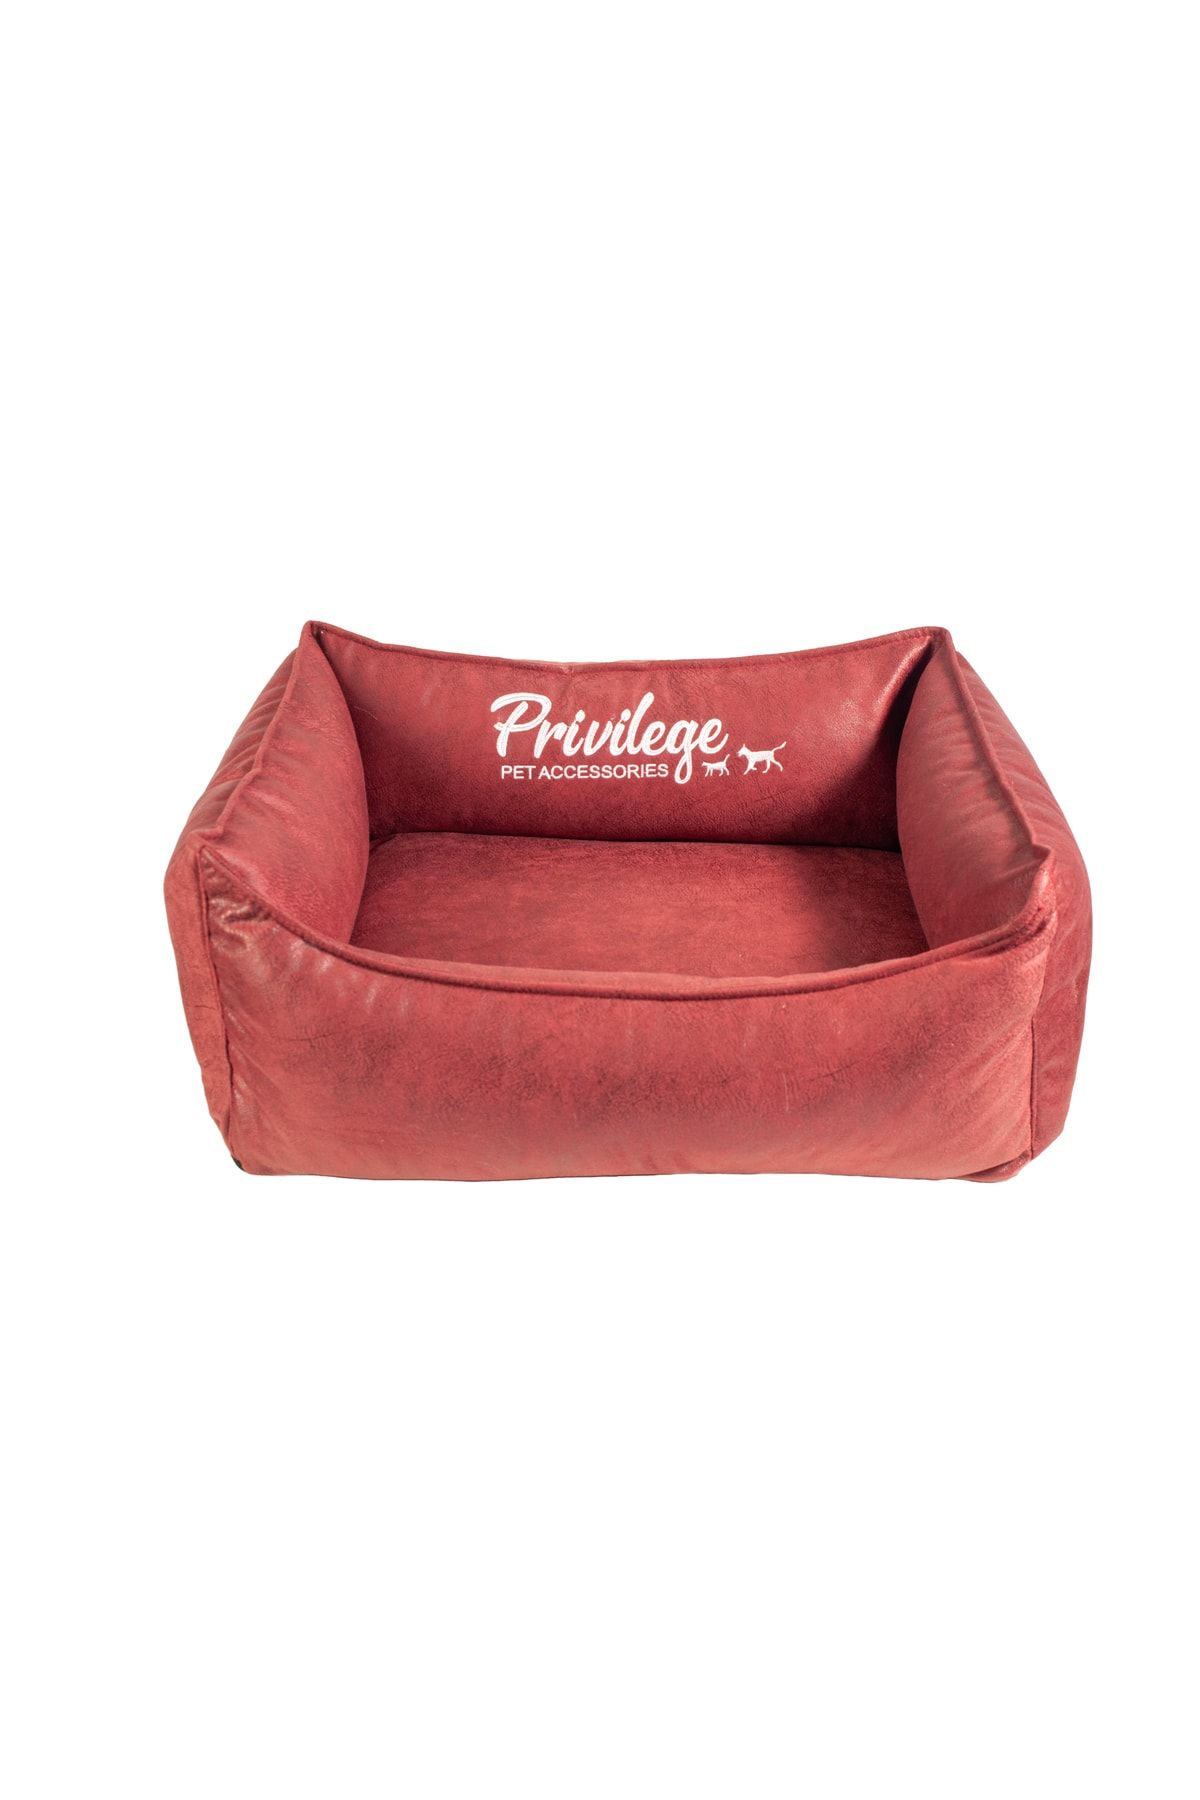 Privilege Premium Visco Köpek Yatağı Kırmızı Small 40x50x22 Cm